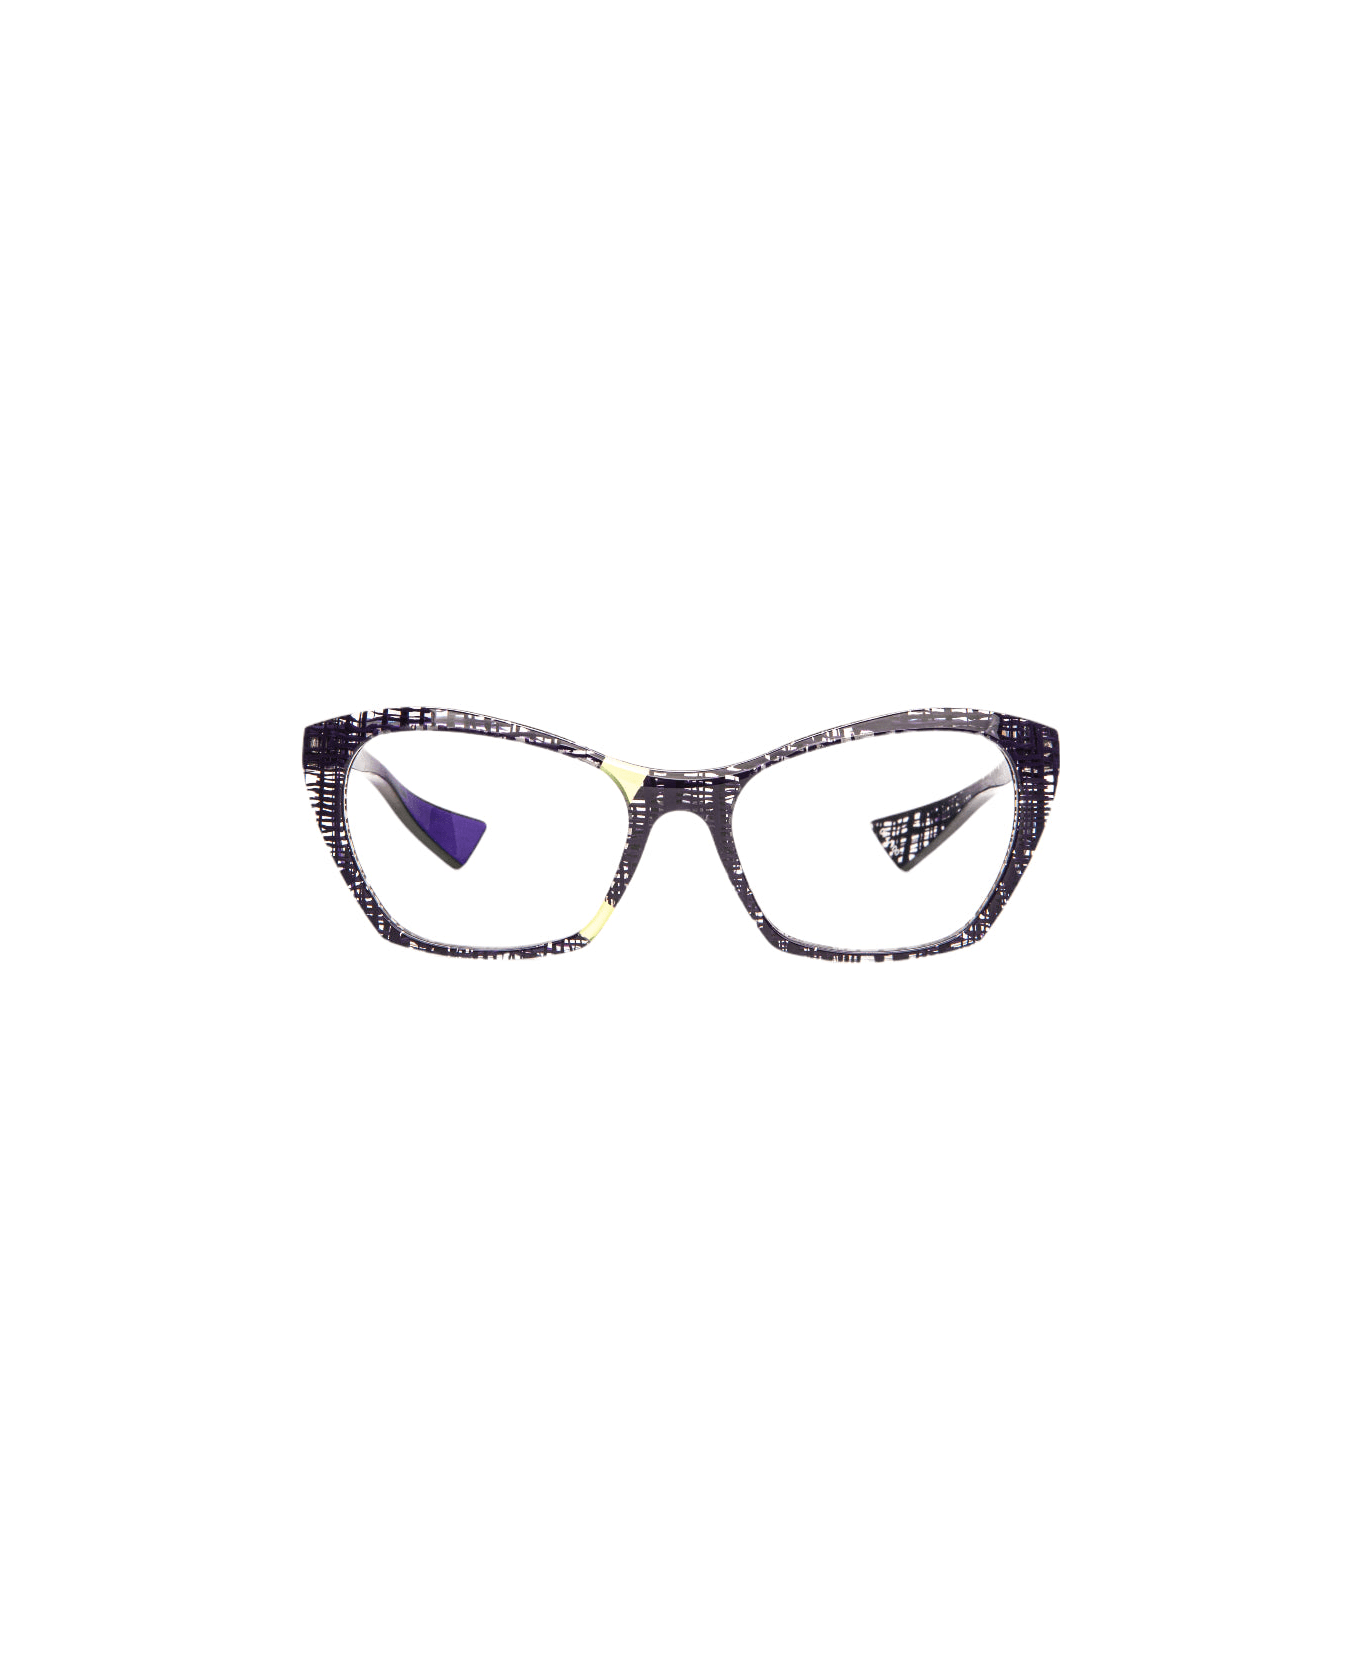 Piero Massaro Pm496 - Knurled Violet Glasses アイウェア